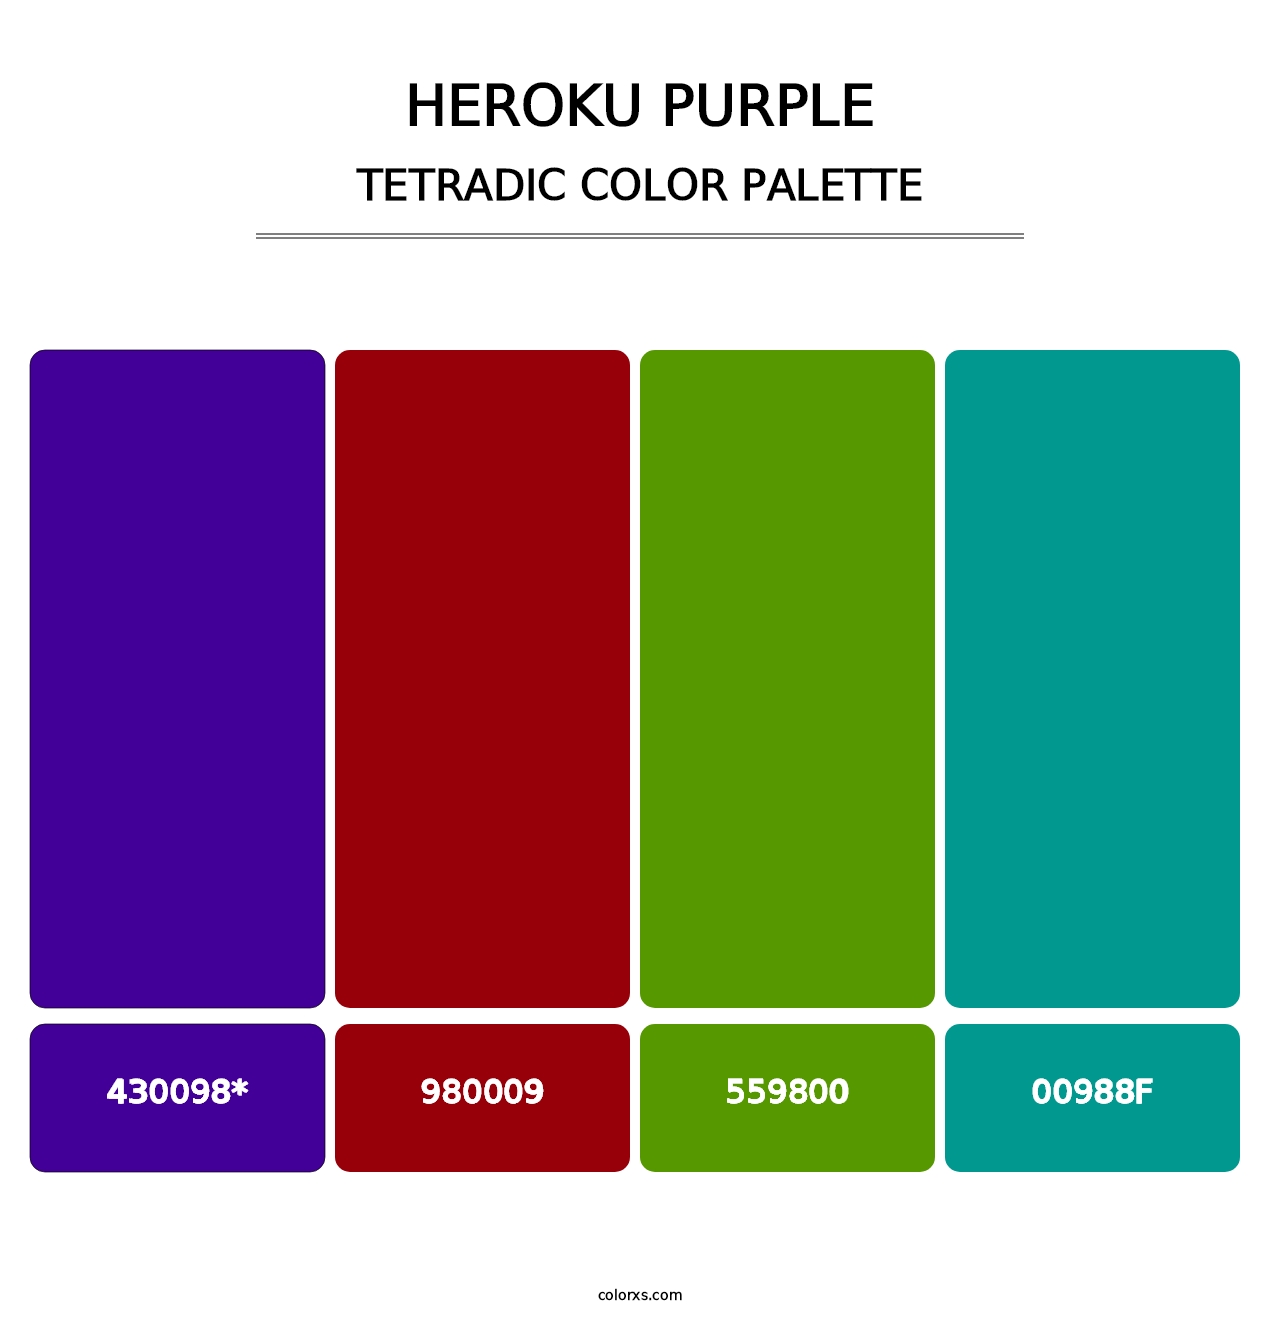 Heroku Purple - Tetradic Color Palette